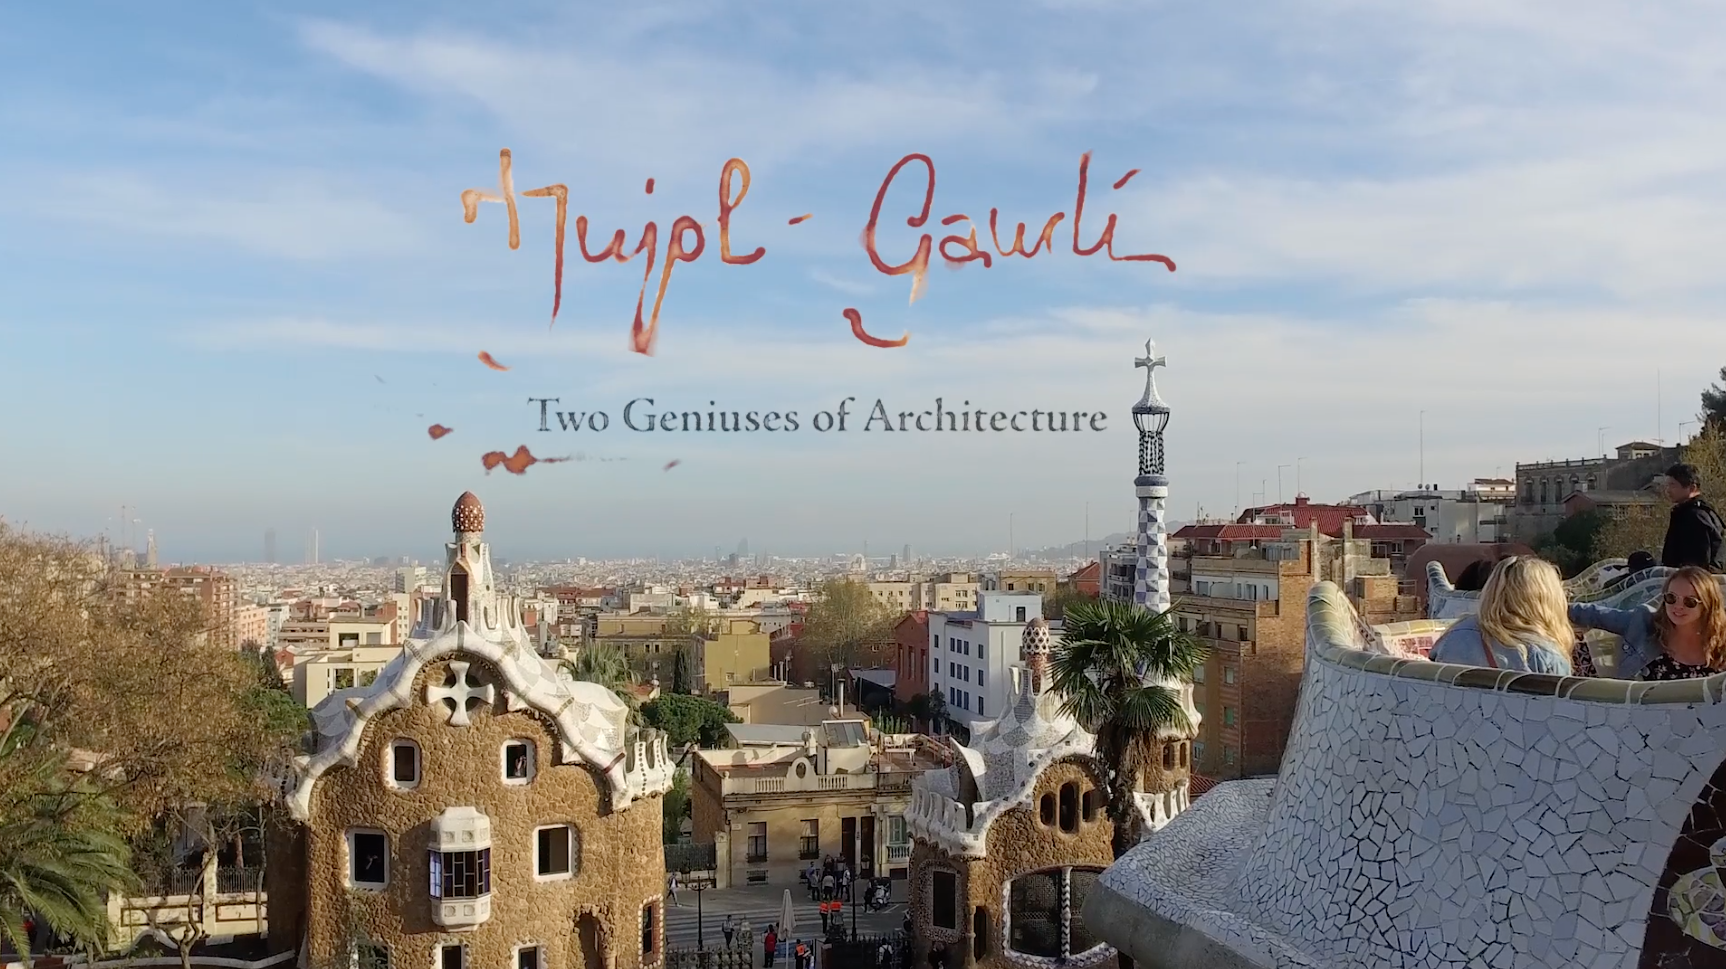 Jujol-Gaudi, two genius of Architecture